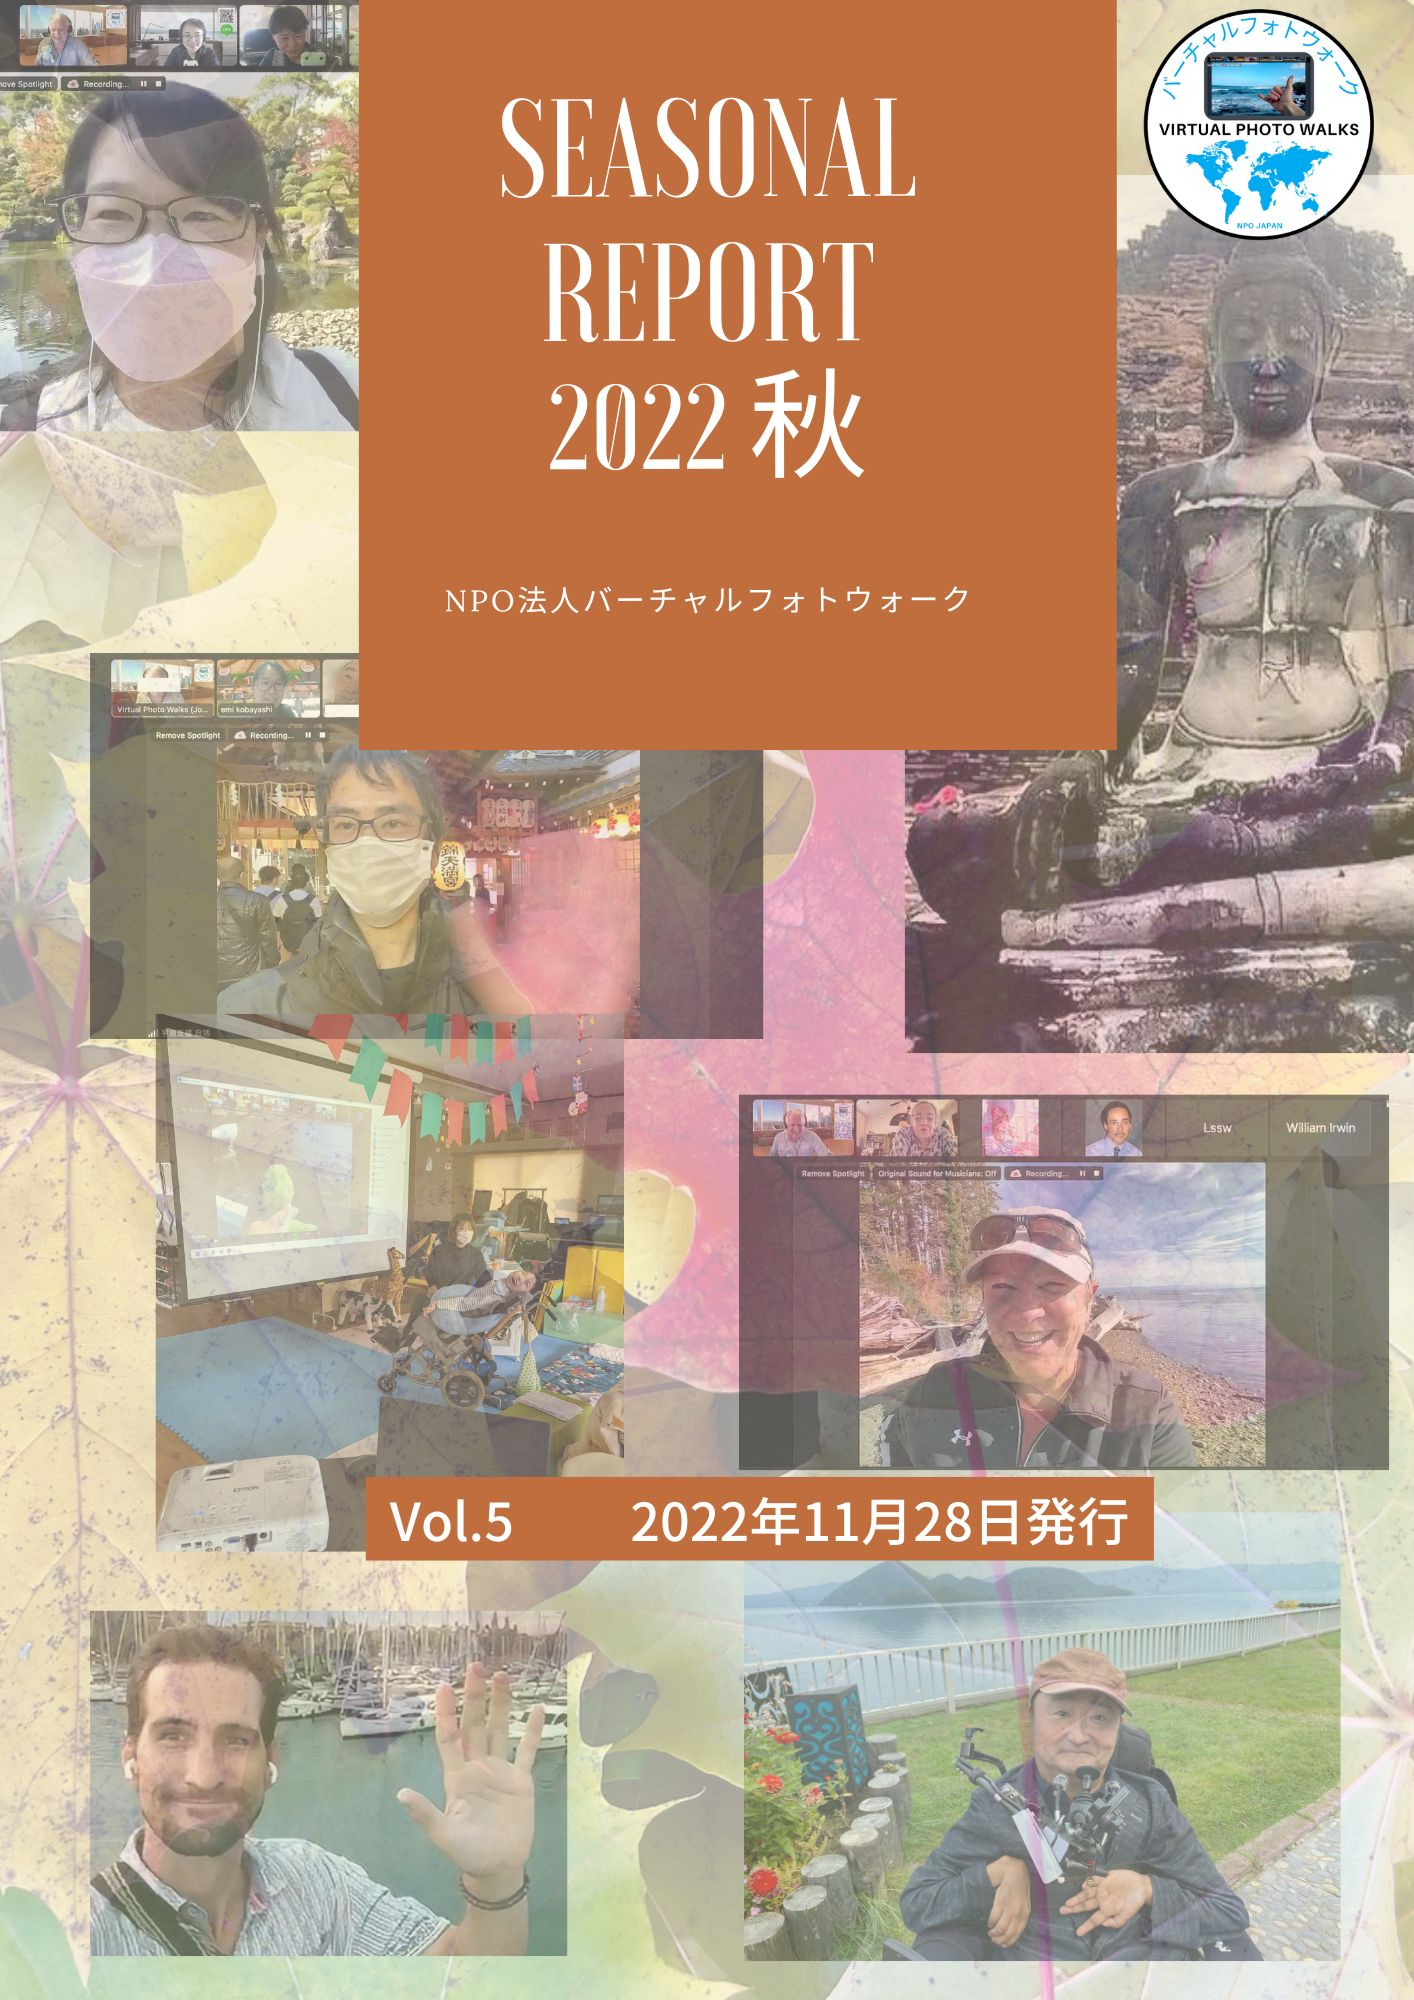 _NPO Virtual Photo Walks 2022 Seasonal Report 秋.jpg